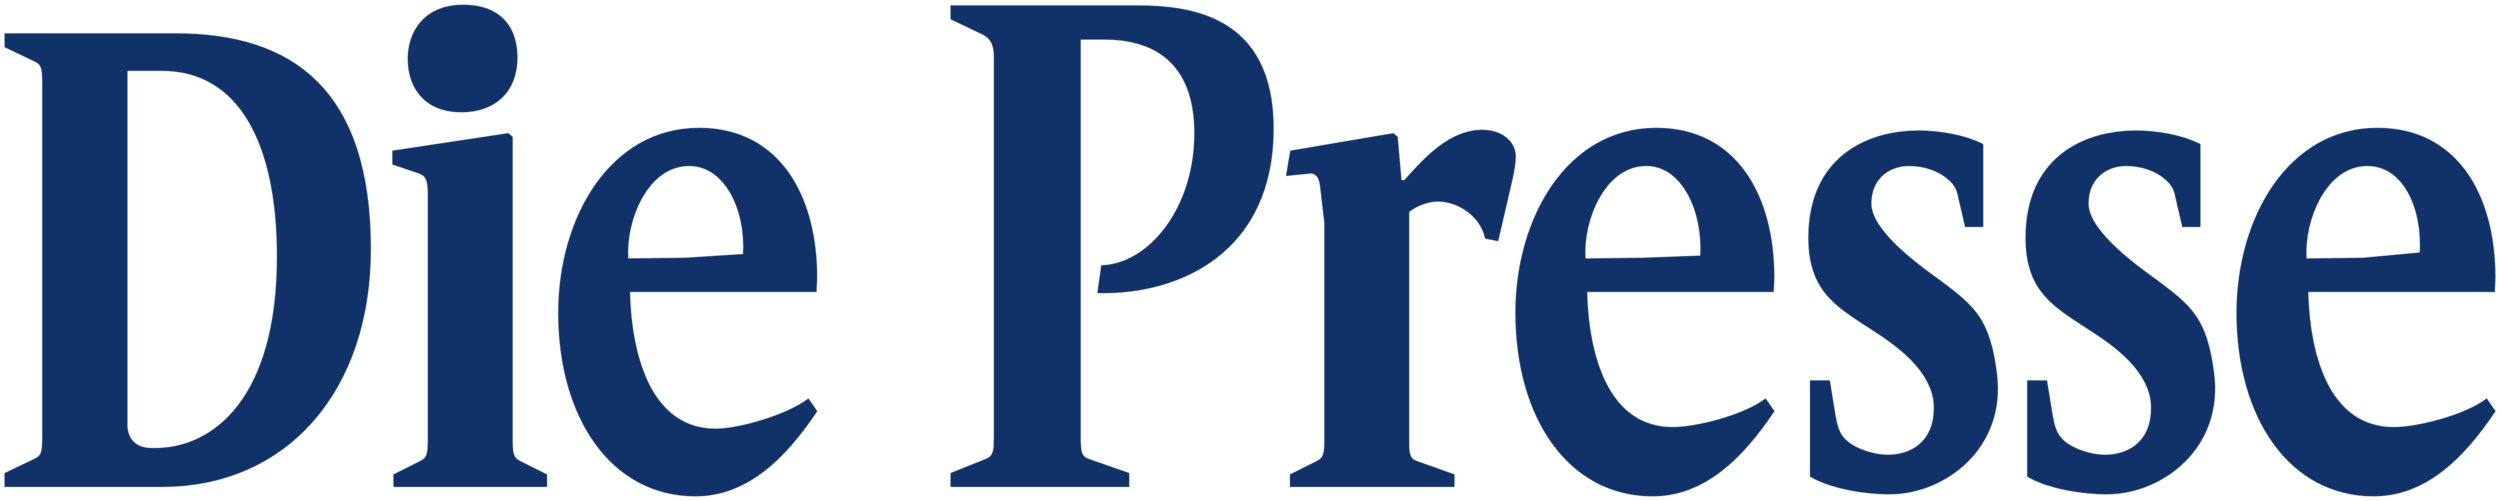 Die_Presse_logo_logotype.png